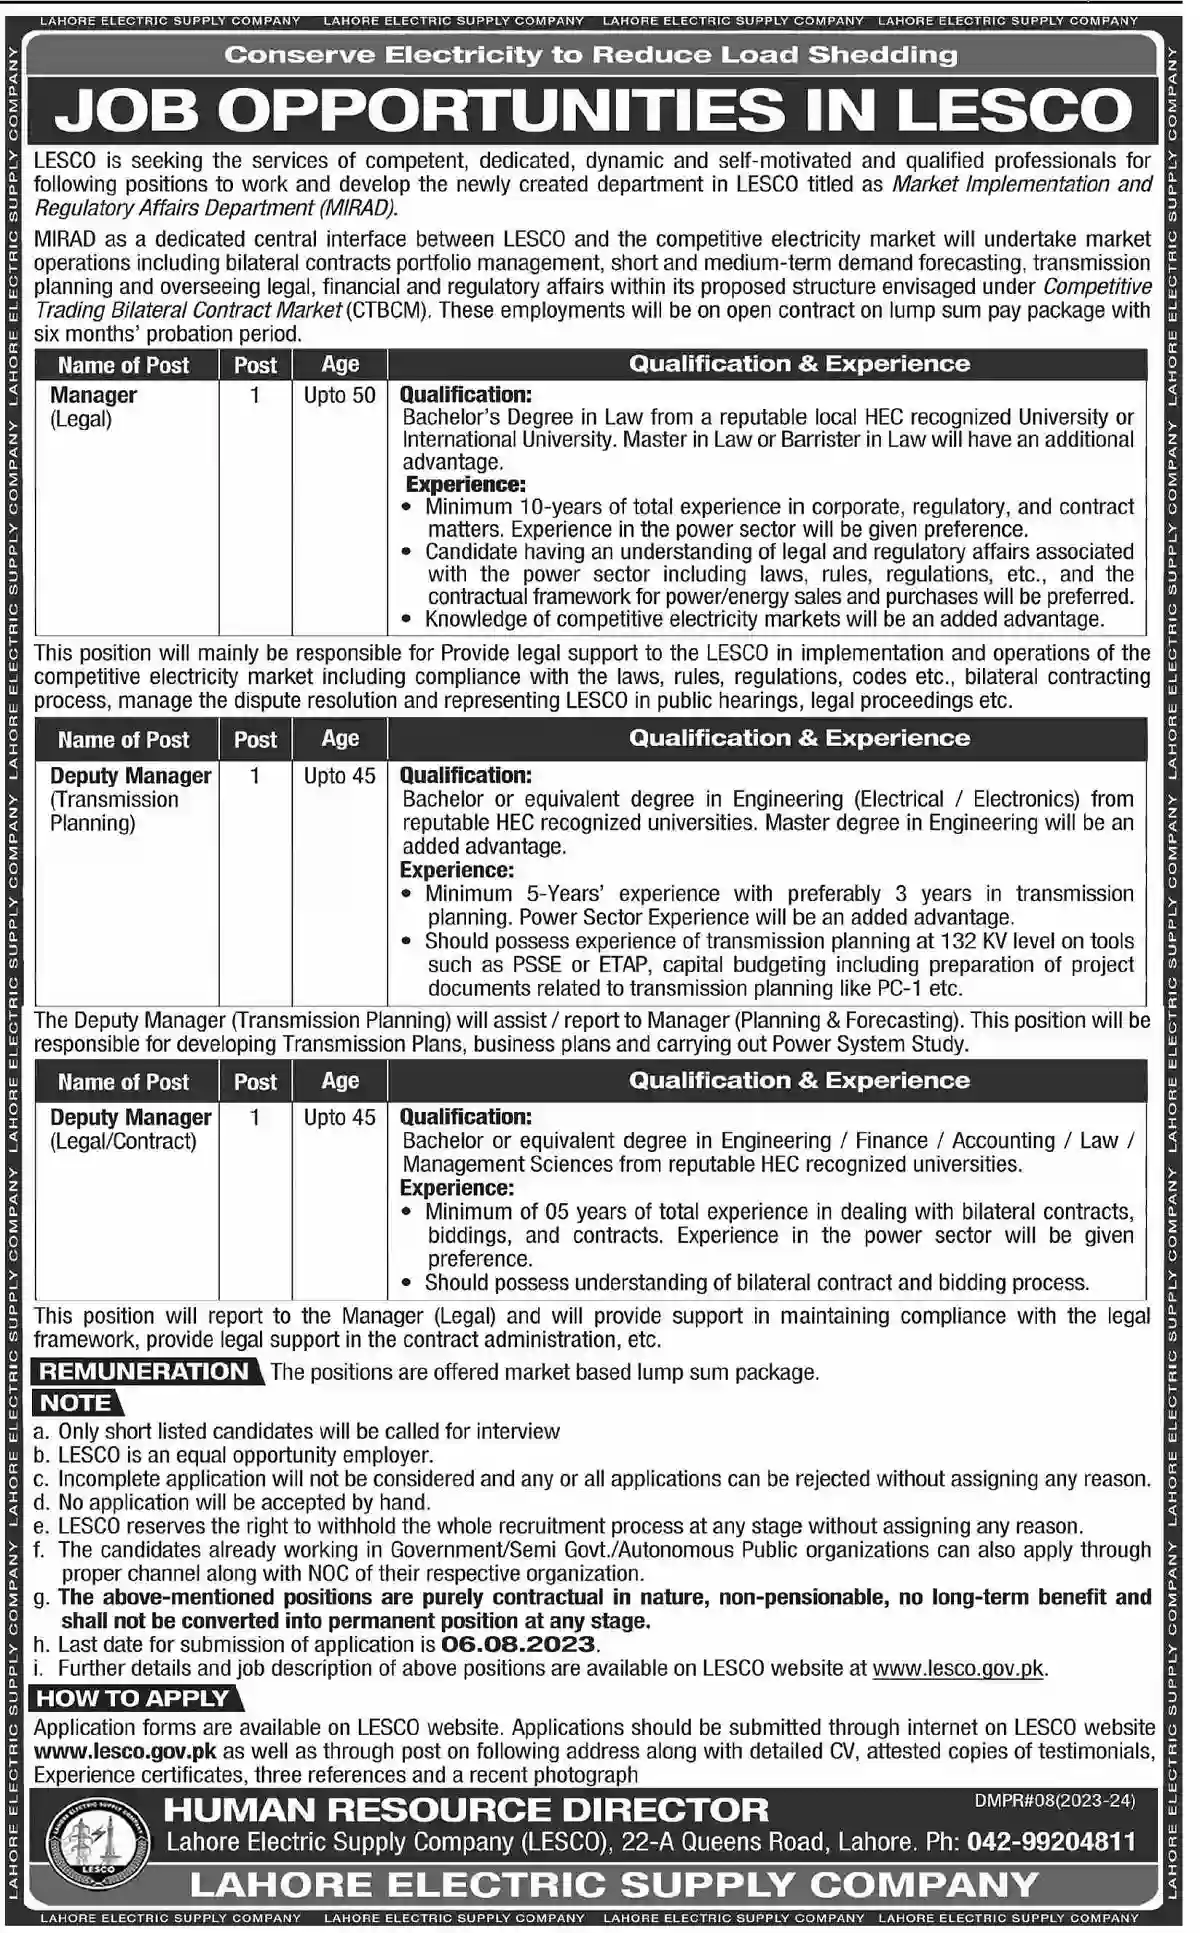 Lahore Electric Supply Company LESCO Jobs 2023 www.lesco.gov.pk Apply Online